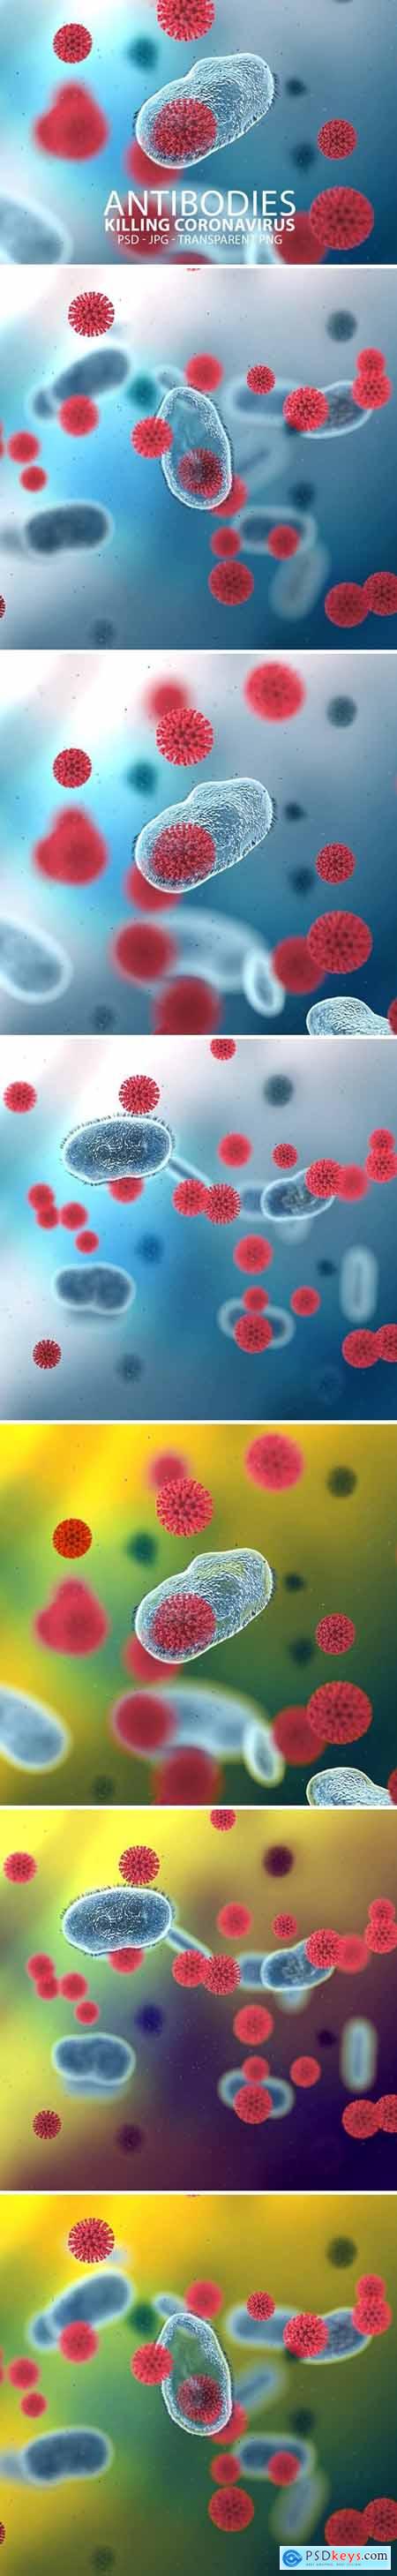 Antibodies Killing Corona Virus